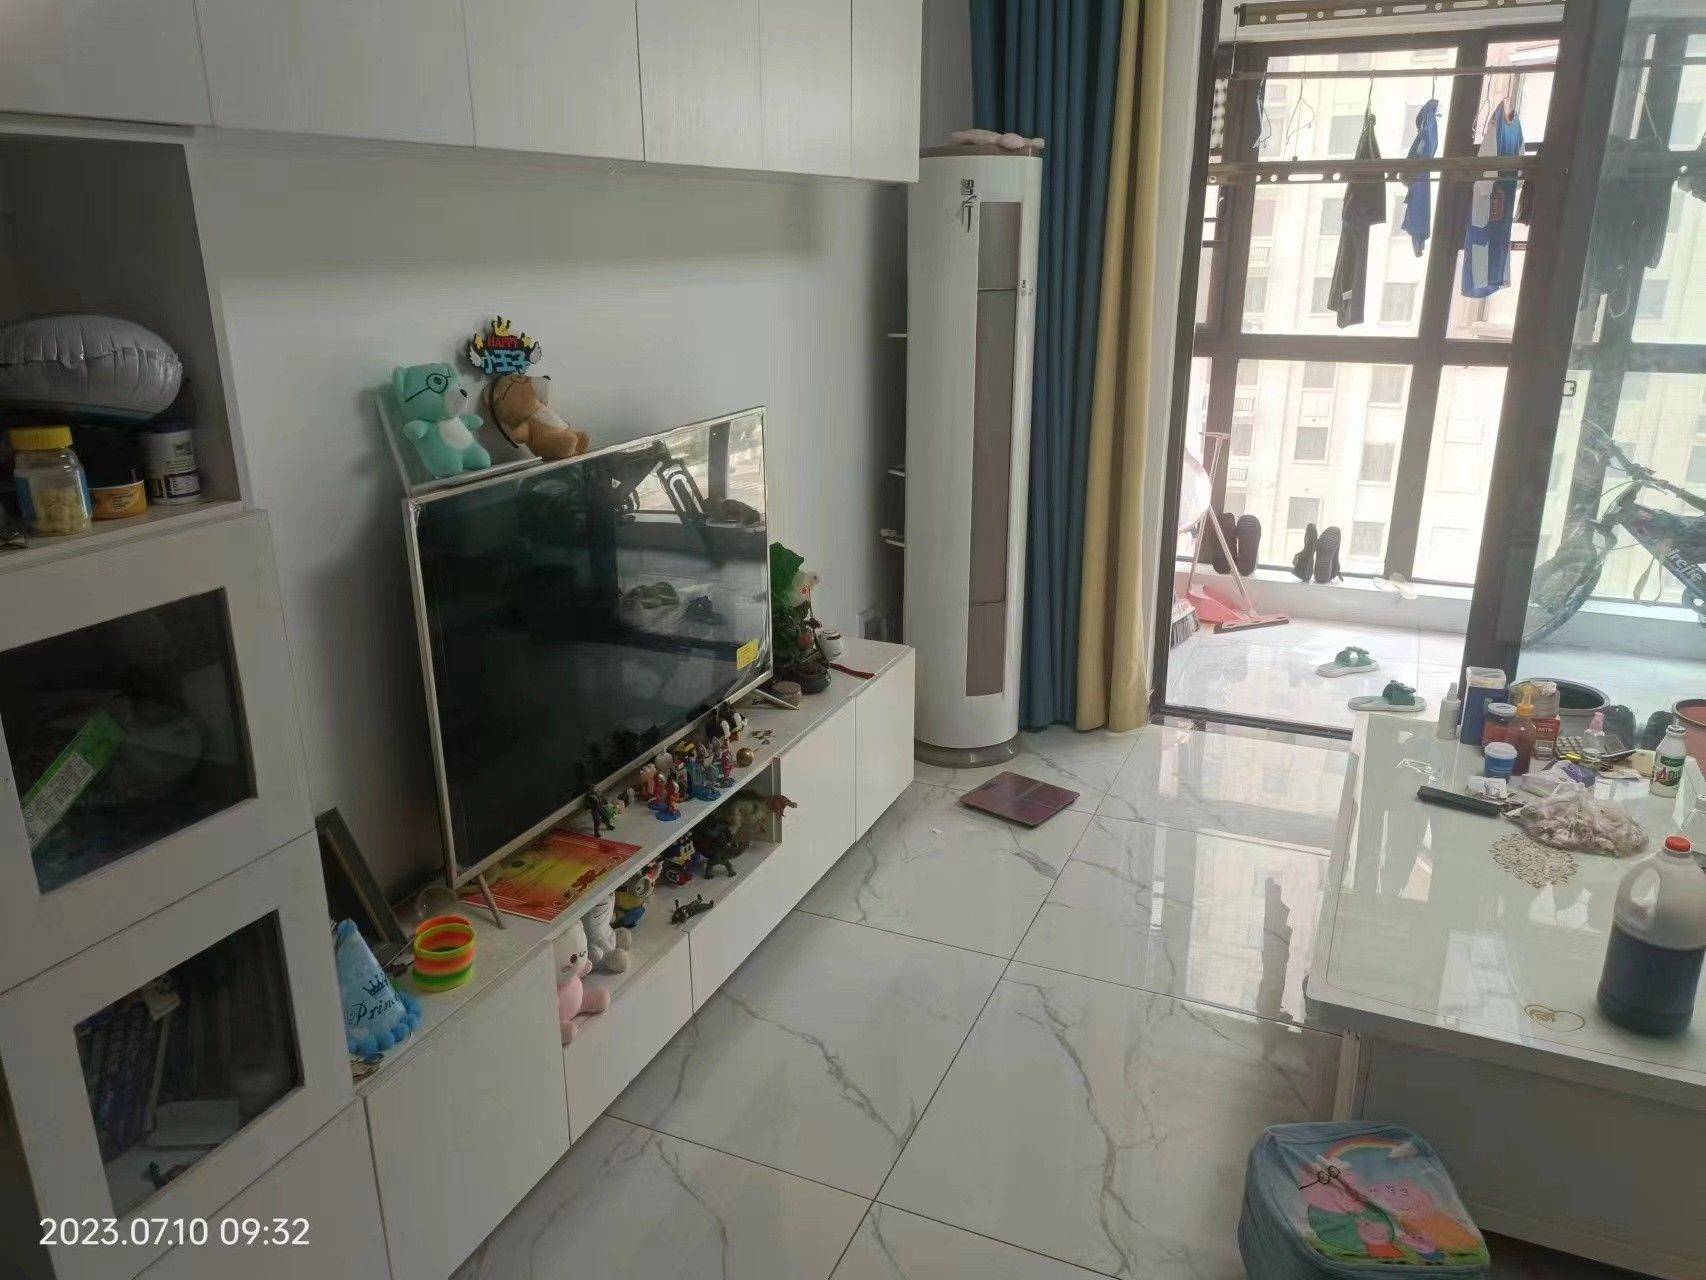 Zhengzhou-Huiji-Cozy Home,Clean&Comfy,No Gender Limit,Hustle & Bustle,“Friends”,Chilled,LGBTQ Friendly,Pet Friendly